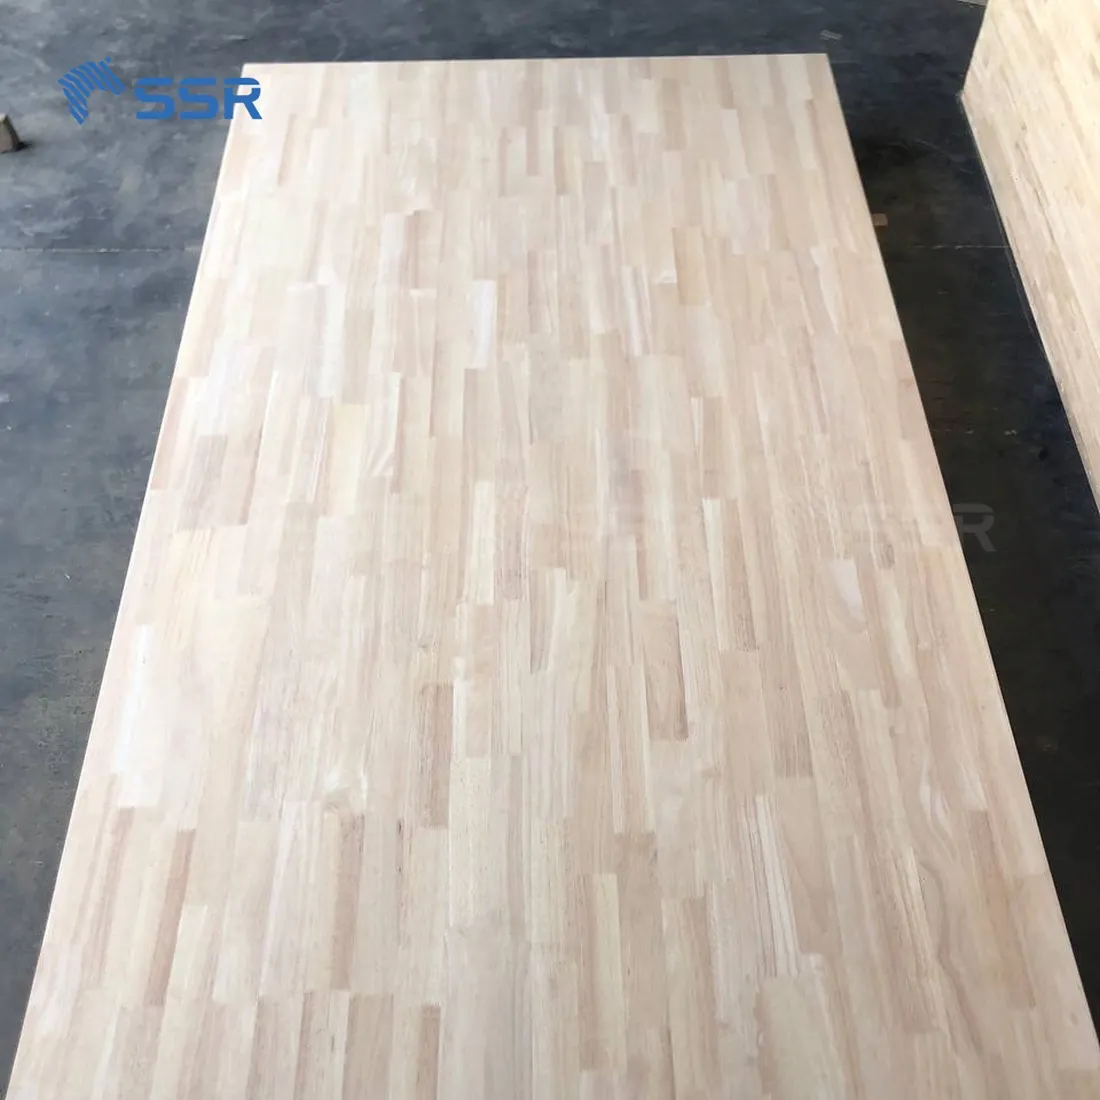 SSR VINA - Rubber Wood  hevea  Finger Joint Board - 18 mm thick finger jointed panel for bedroom living room furniture